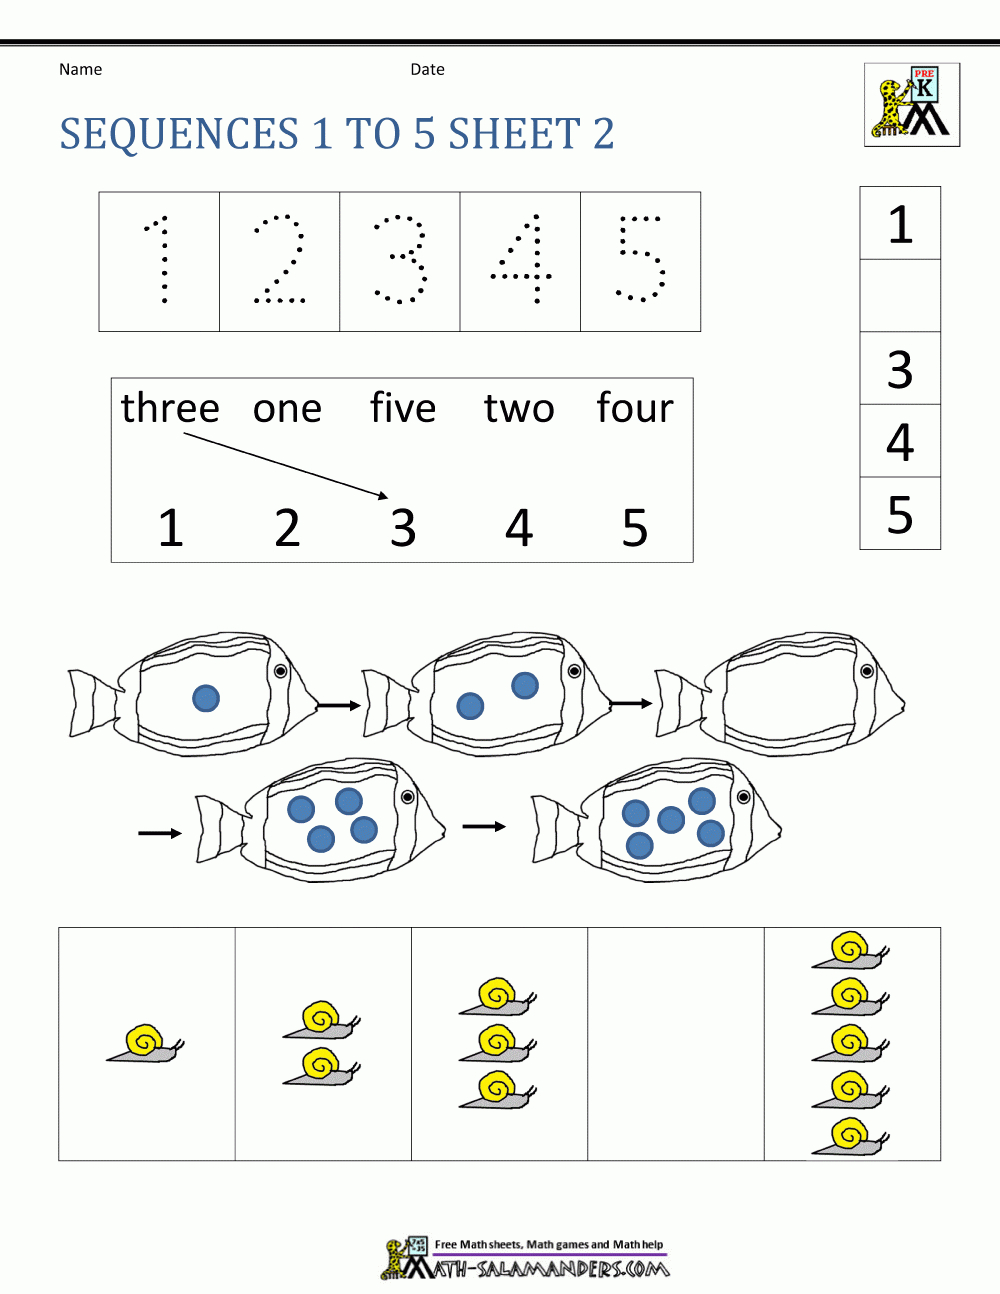 Preschool Number Worksheets  Sequencing To 10 As Well As Picture Sequencing Worksheets